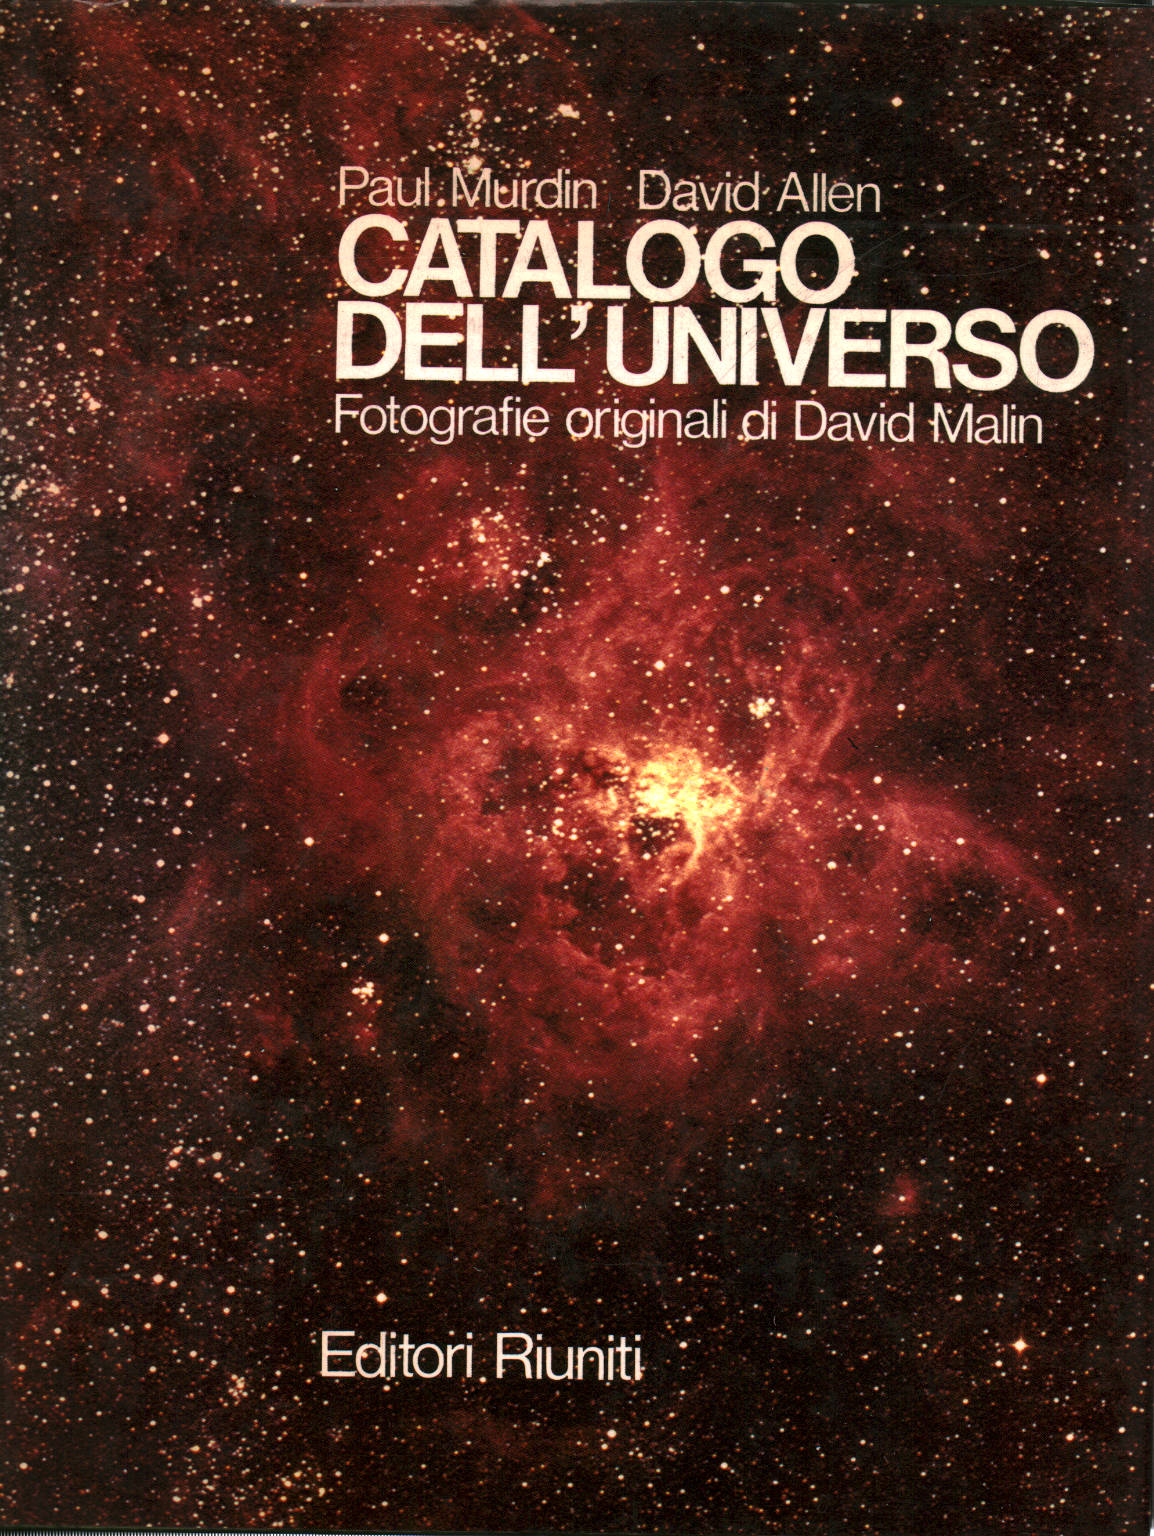 Catalogue de l'Univers, s.un.